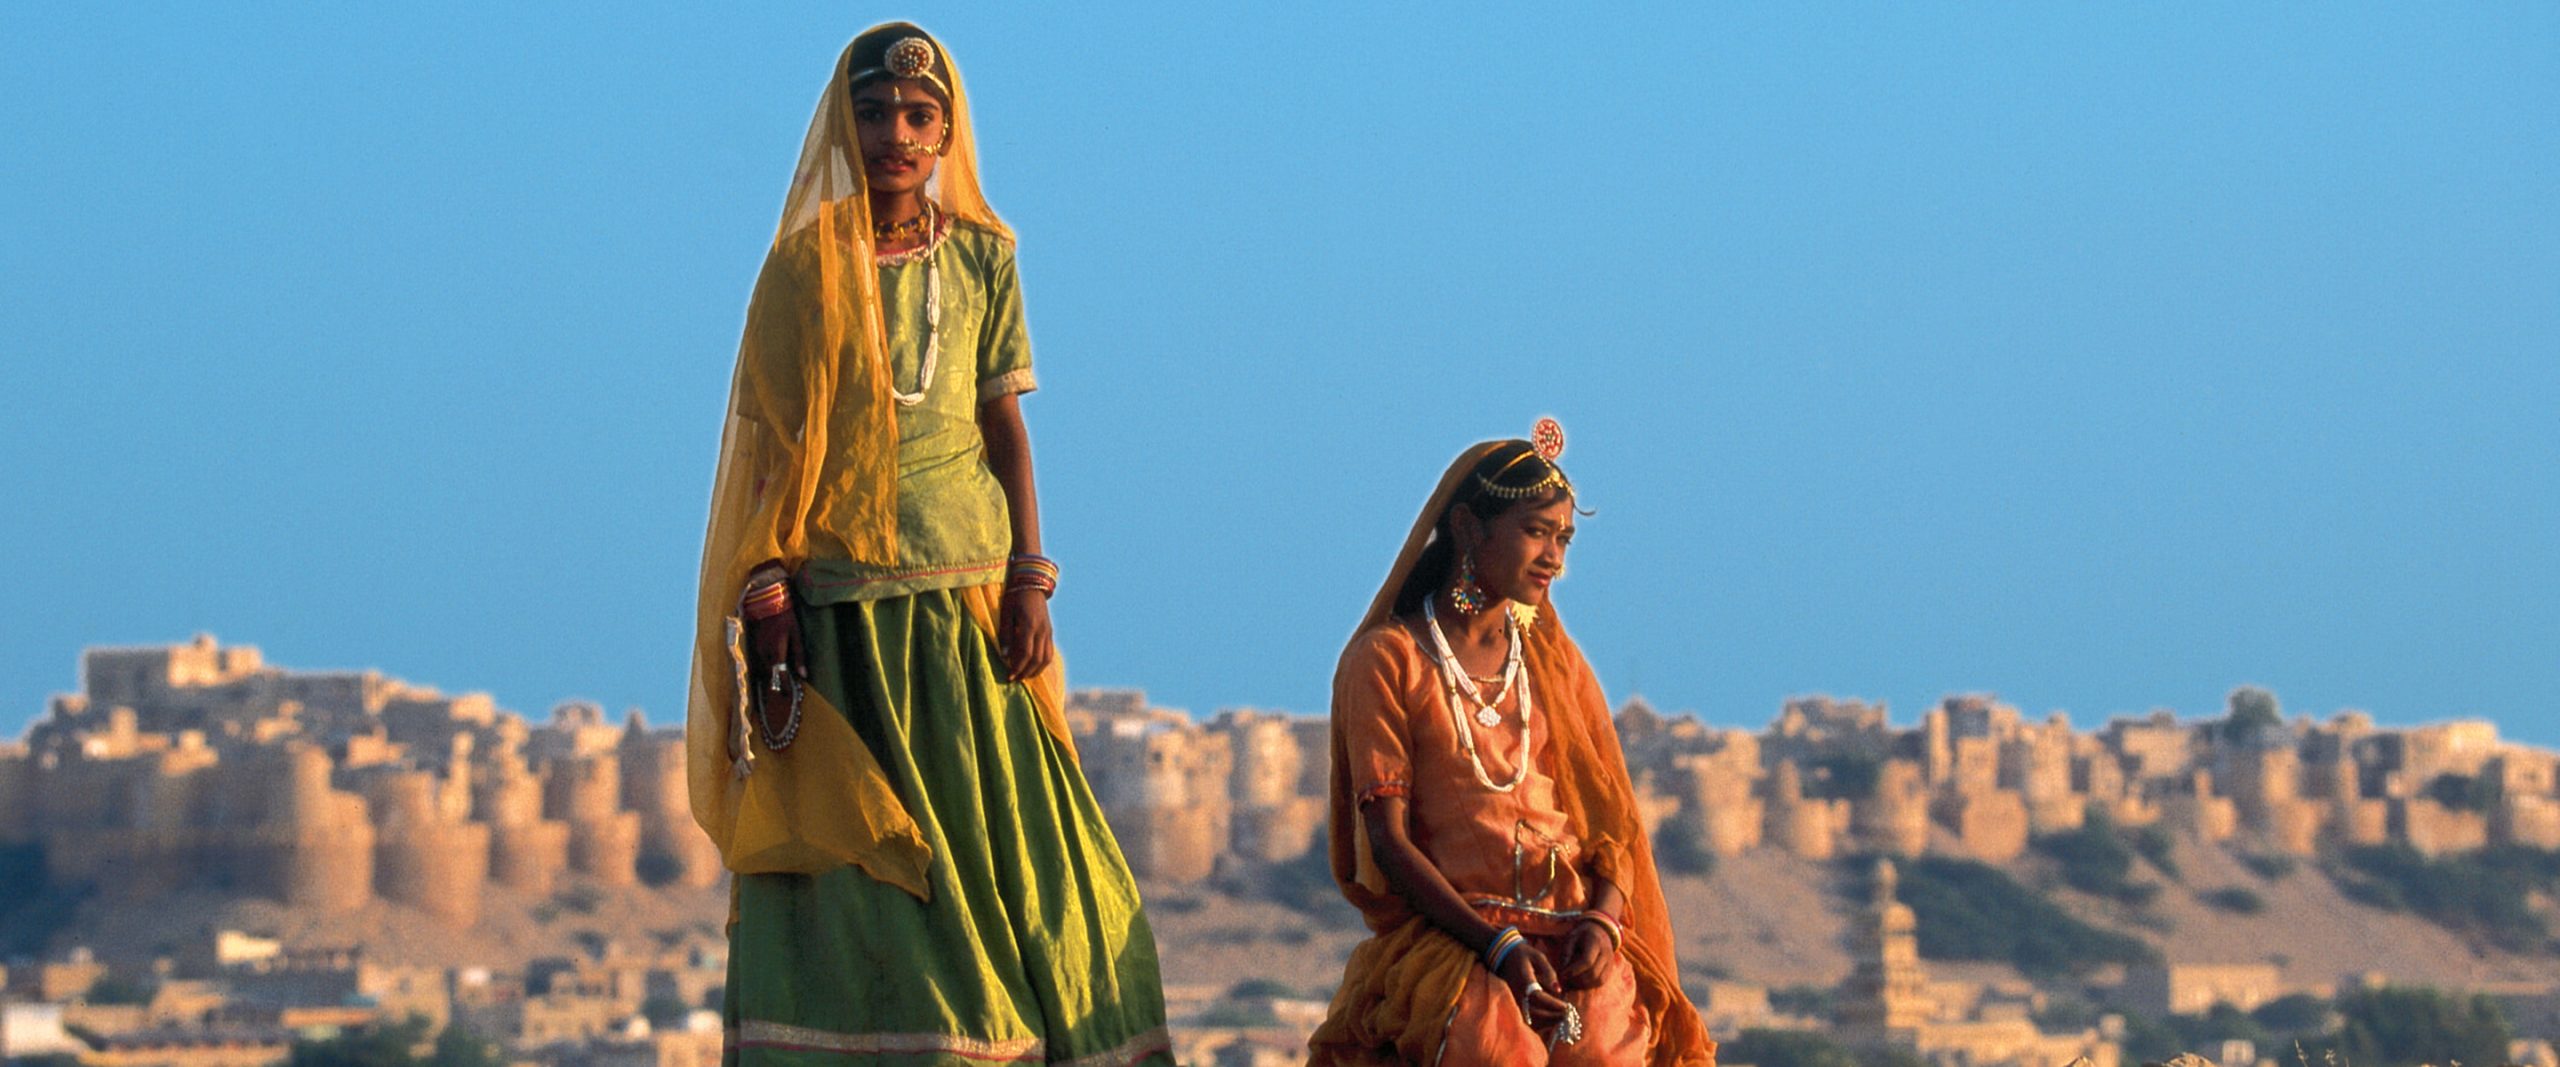 Gruppenreise Indien - Kultur Saris